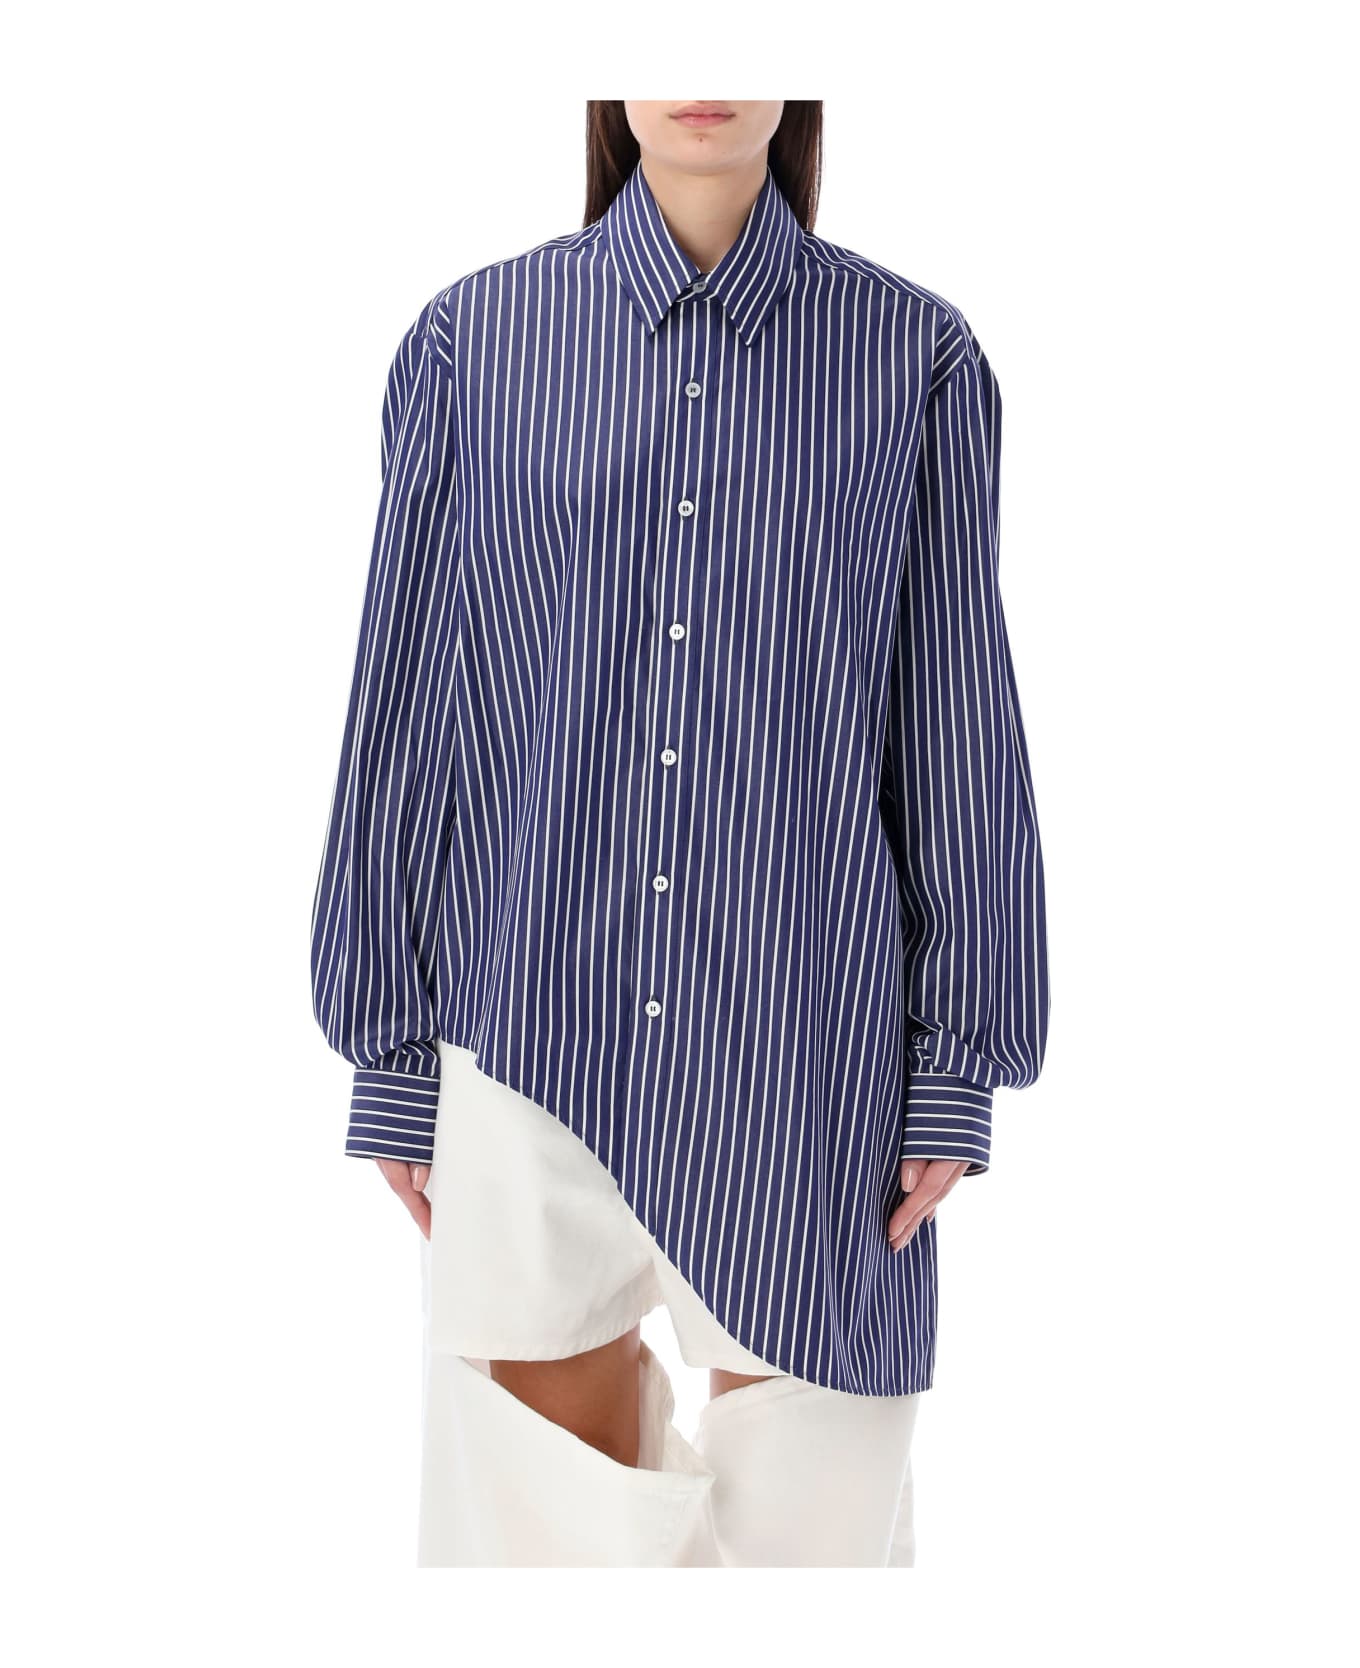 SSHEENA Stripe Shirt Quote Back - LIGHT BLUE STRIPE